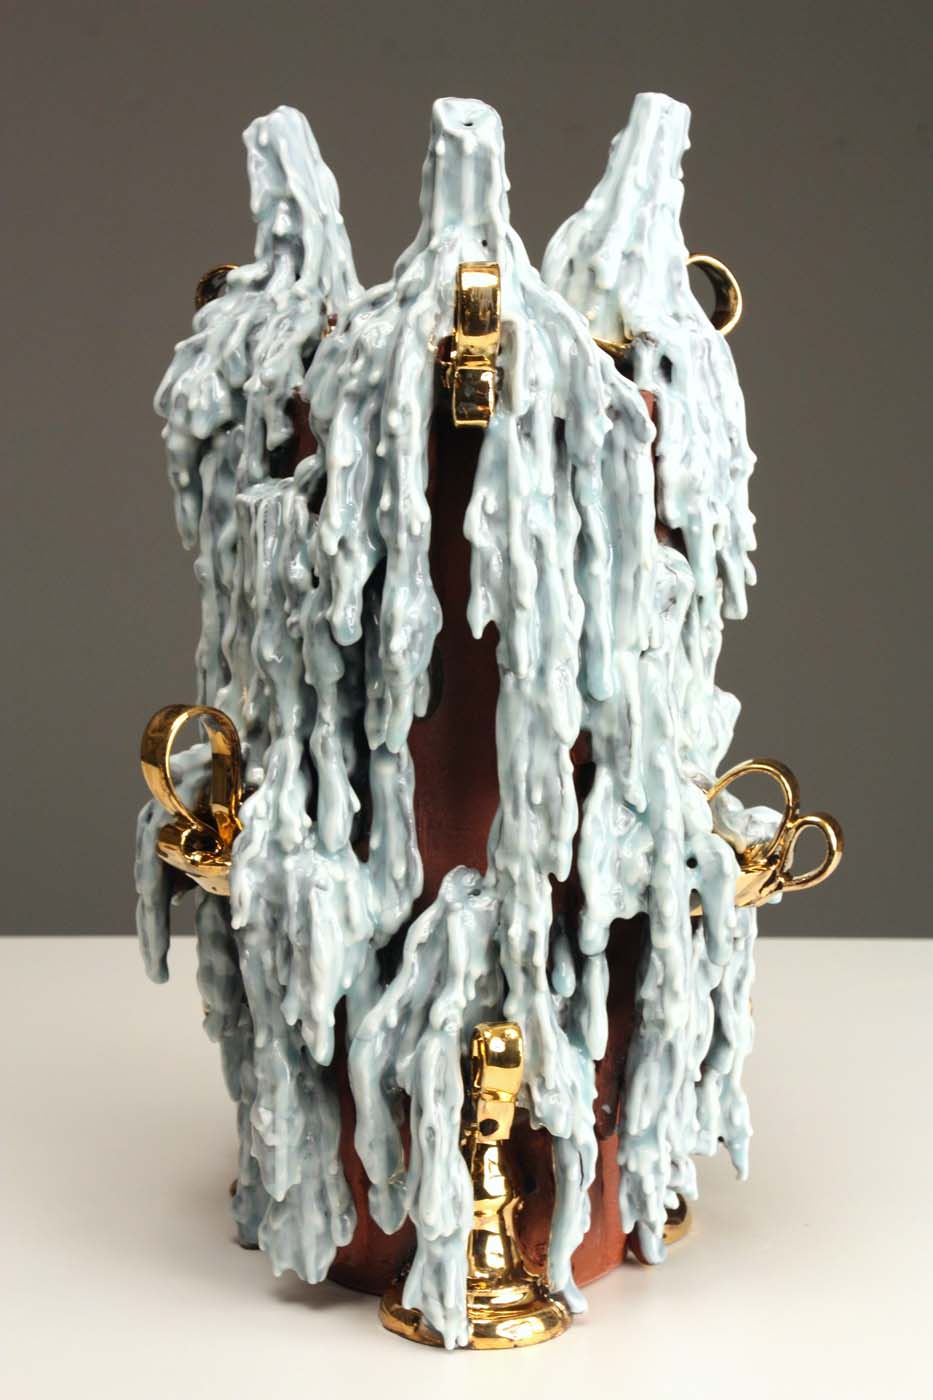 Candle Vase 4 Sculpture by artist Dirk Staschke